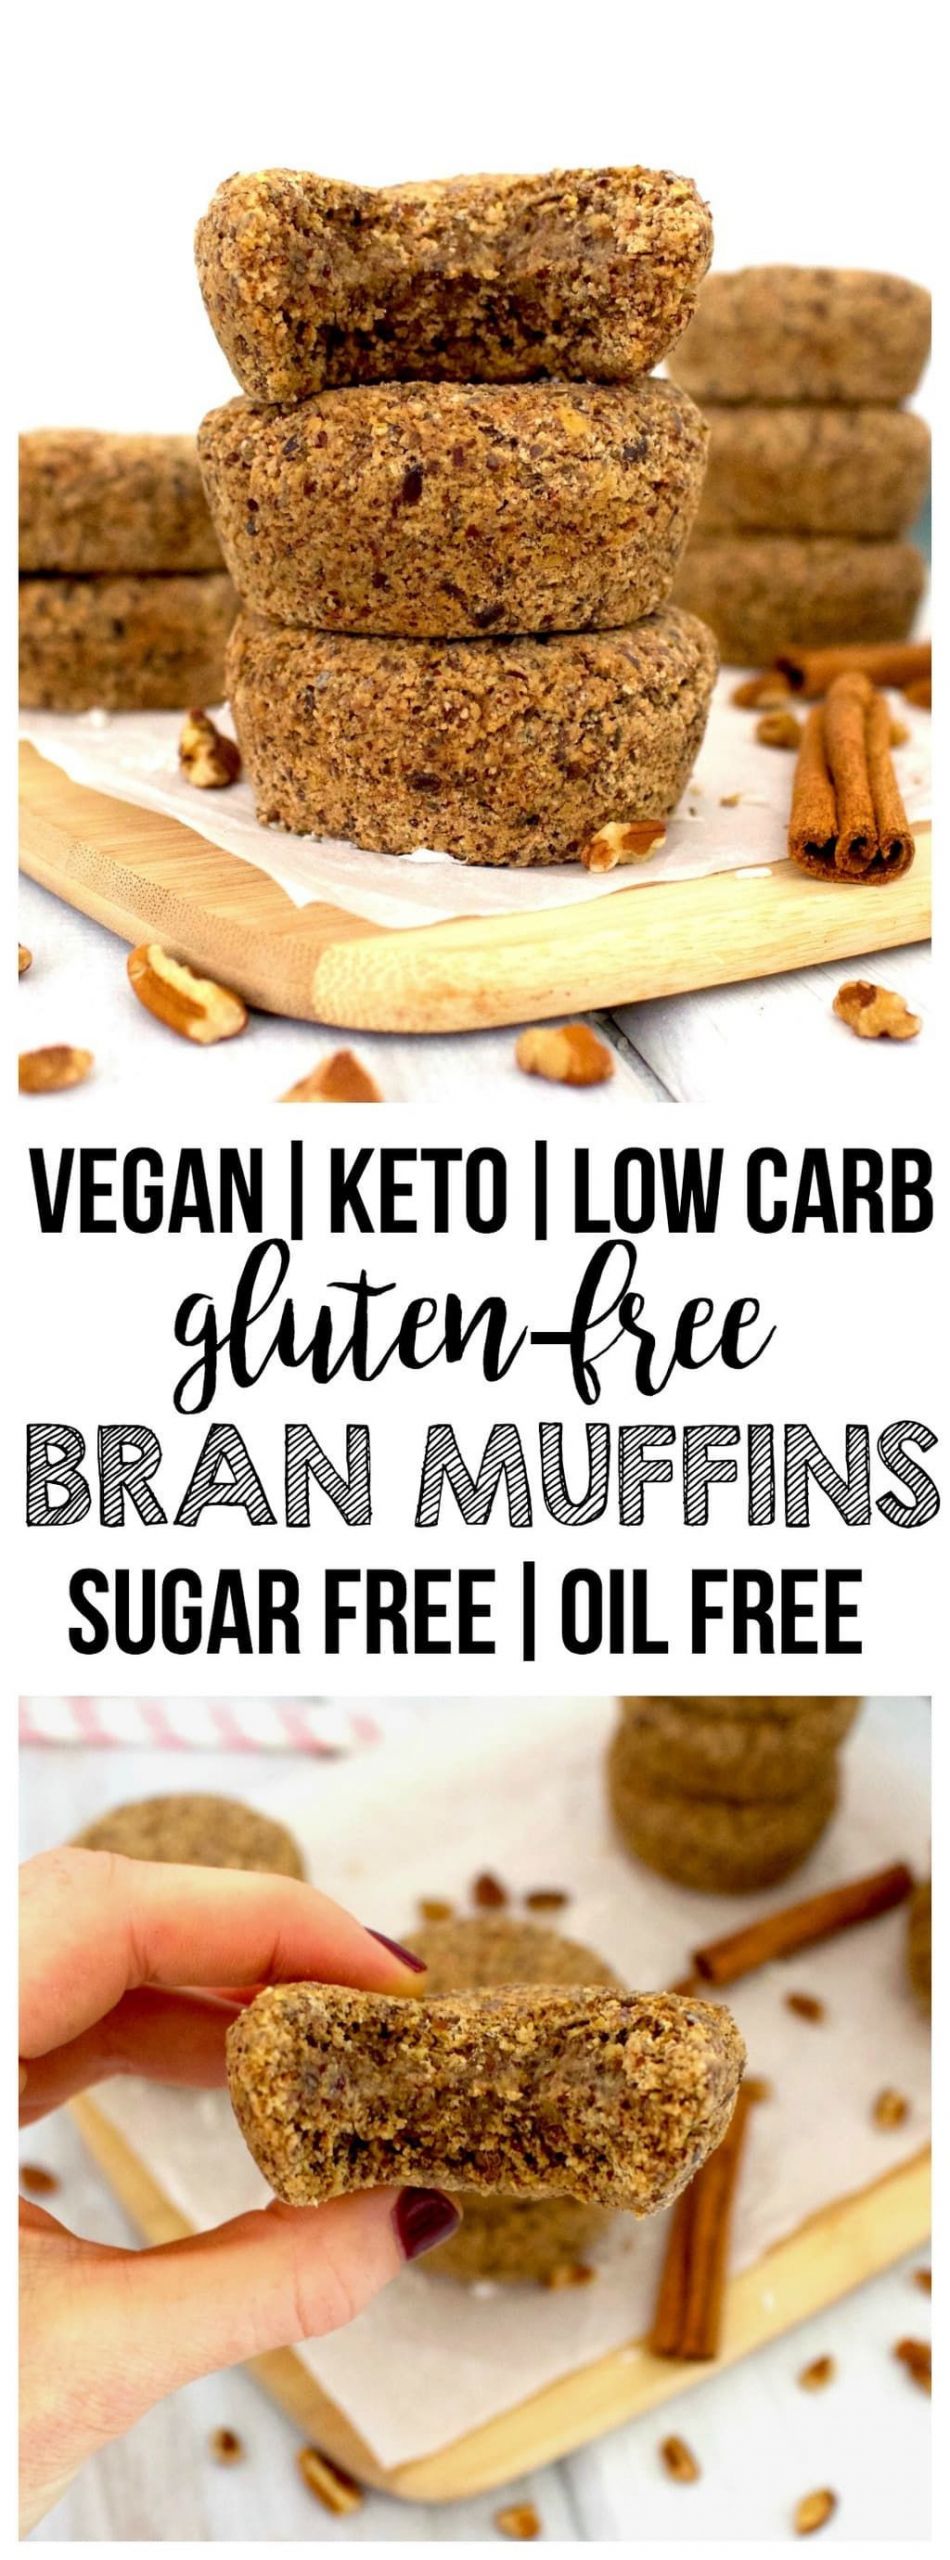 Vegetarian Keto Recipes Dairy Free
 Keto Vegan Bran Muffins Recipe